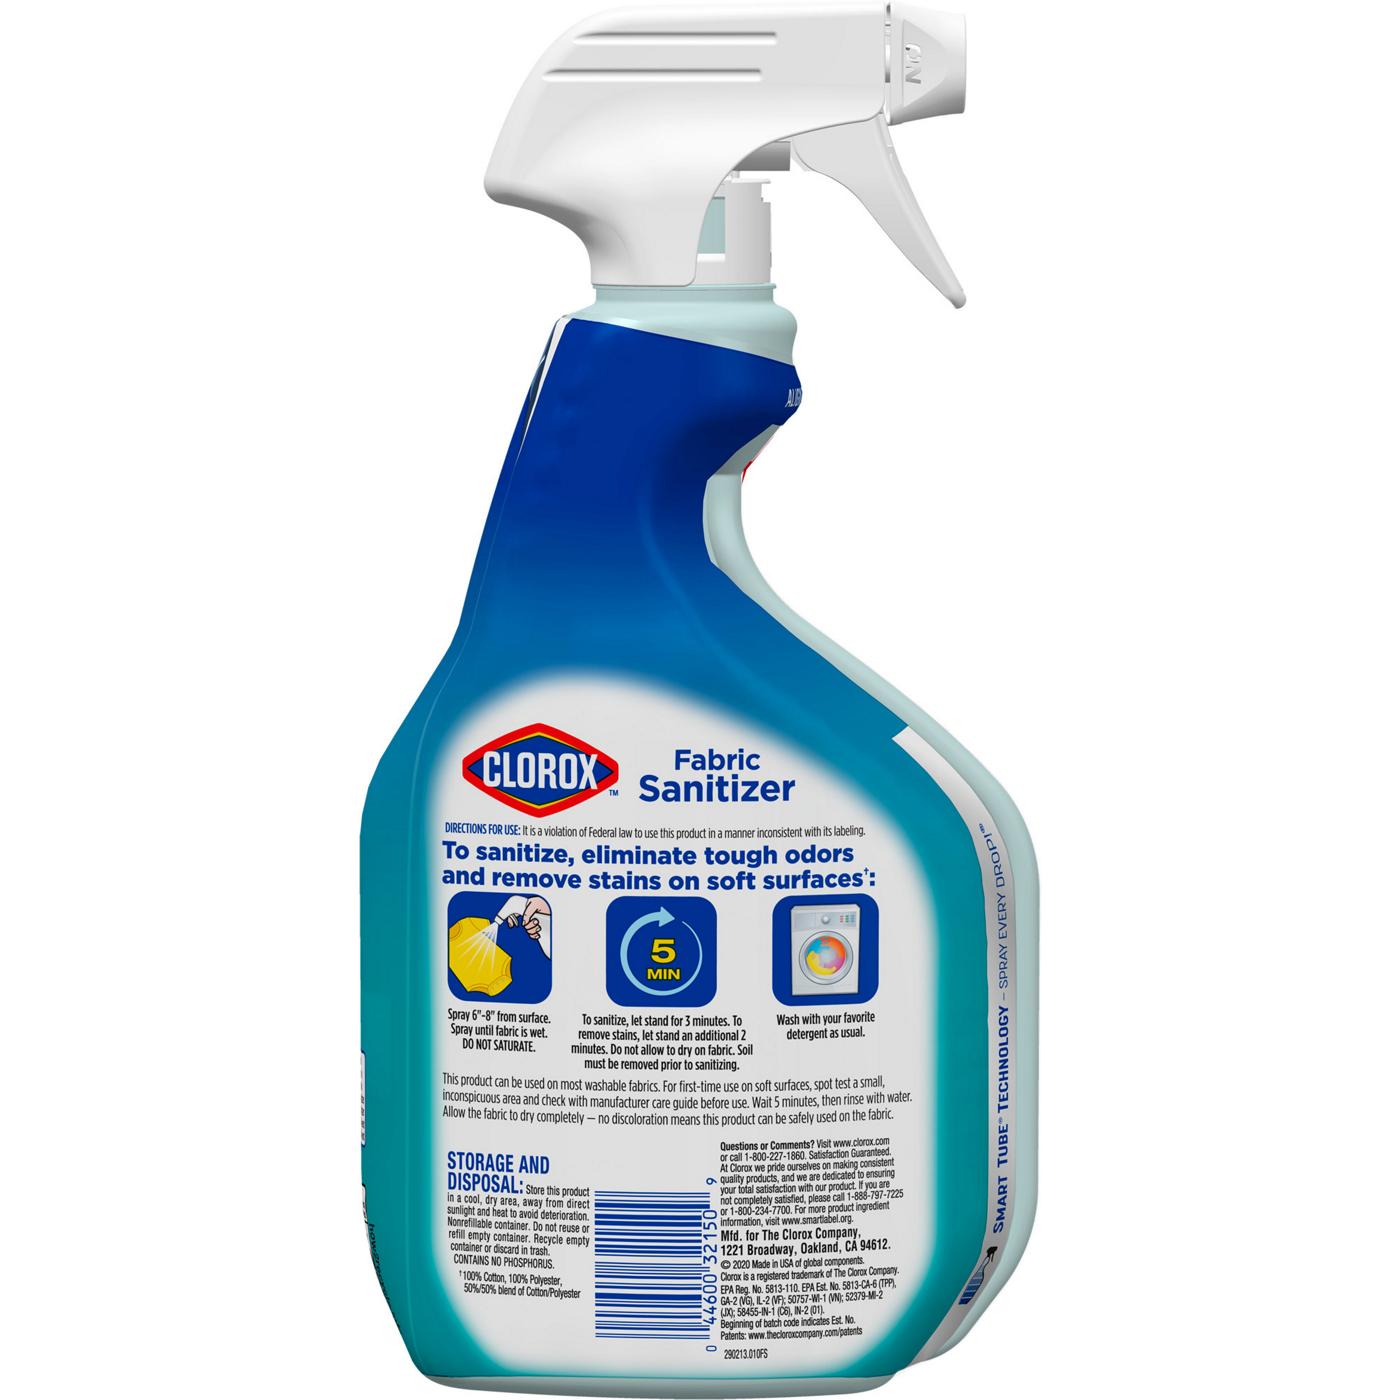 Clorox Fabric Sanitizer Spray; image 6 of 7